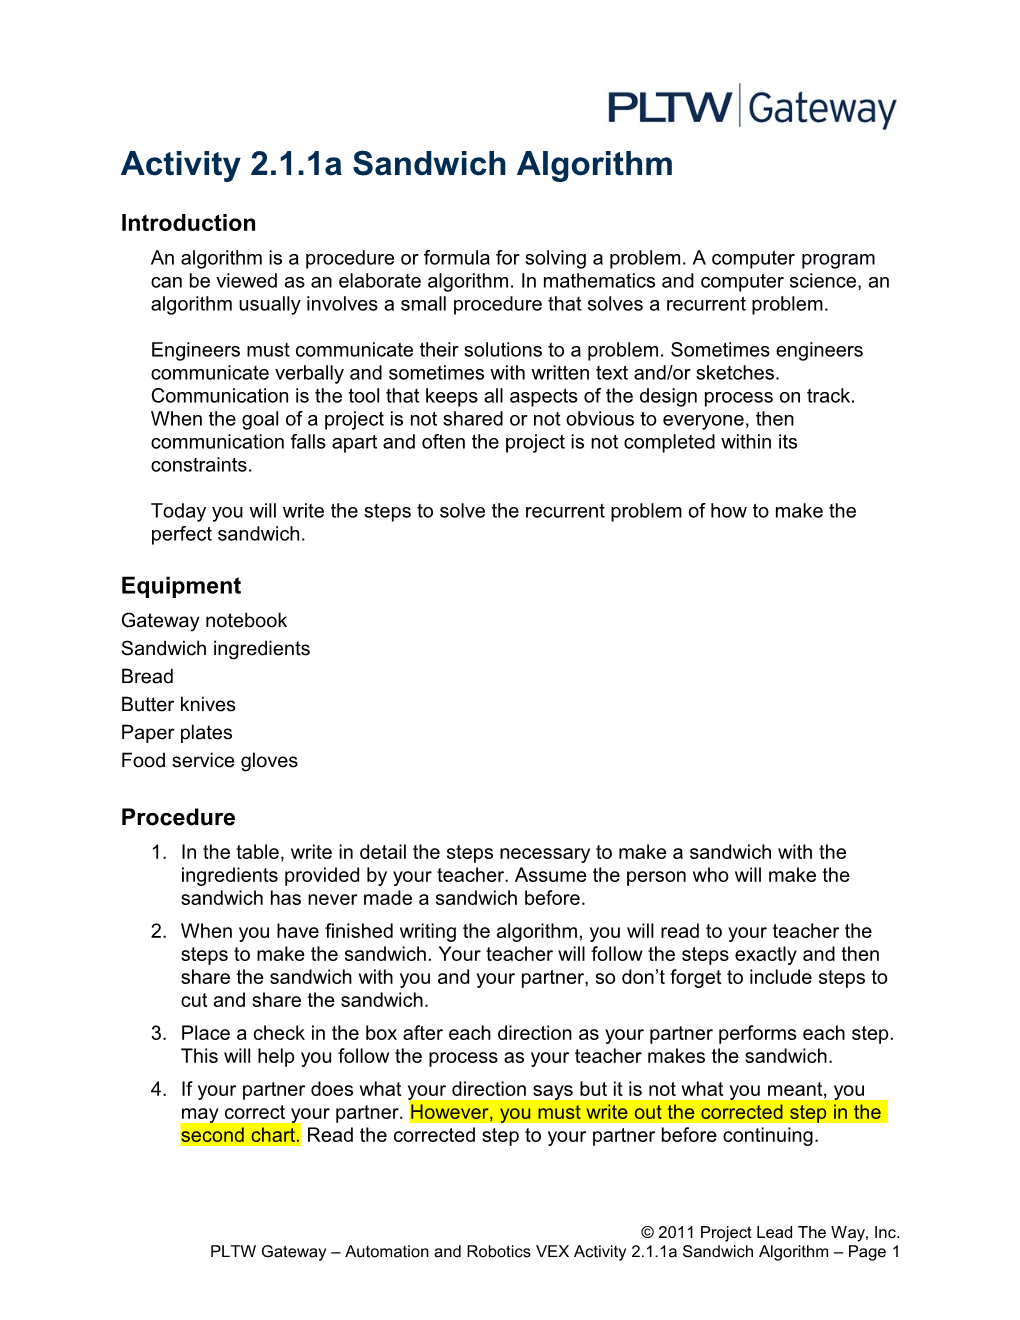 Activity 2.1.1A Ham Cheese Algorithm